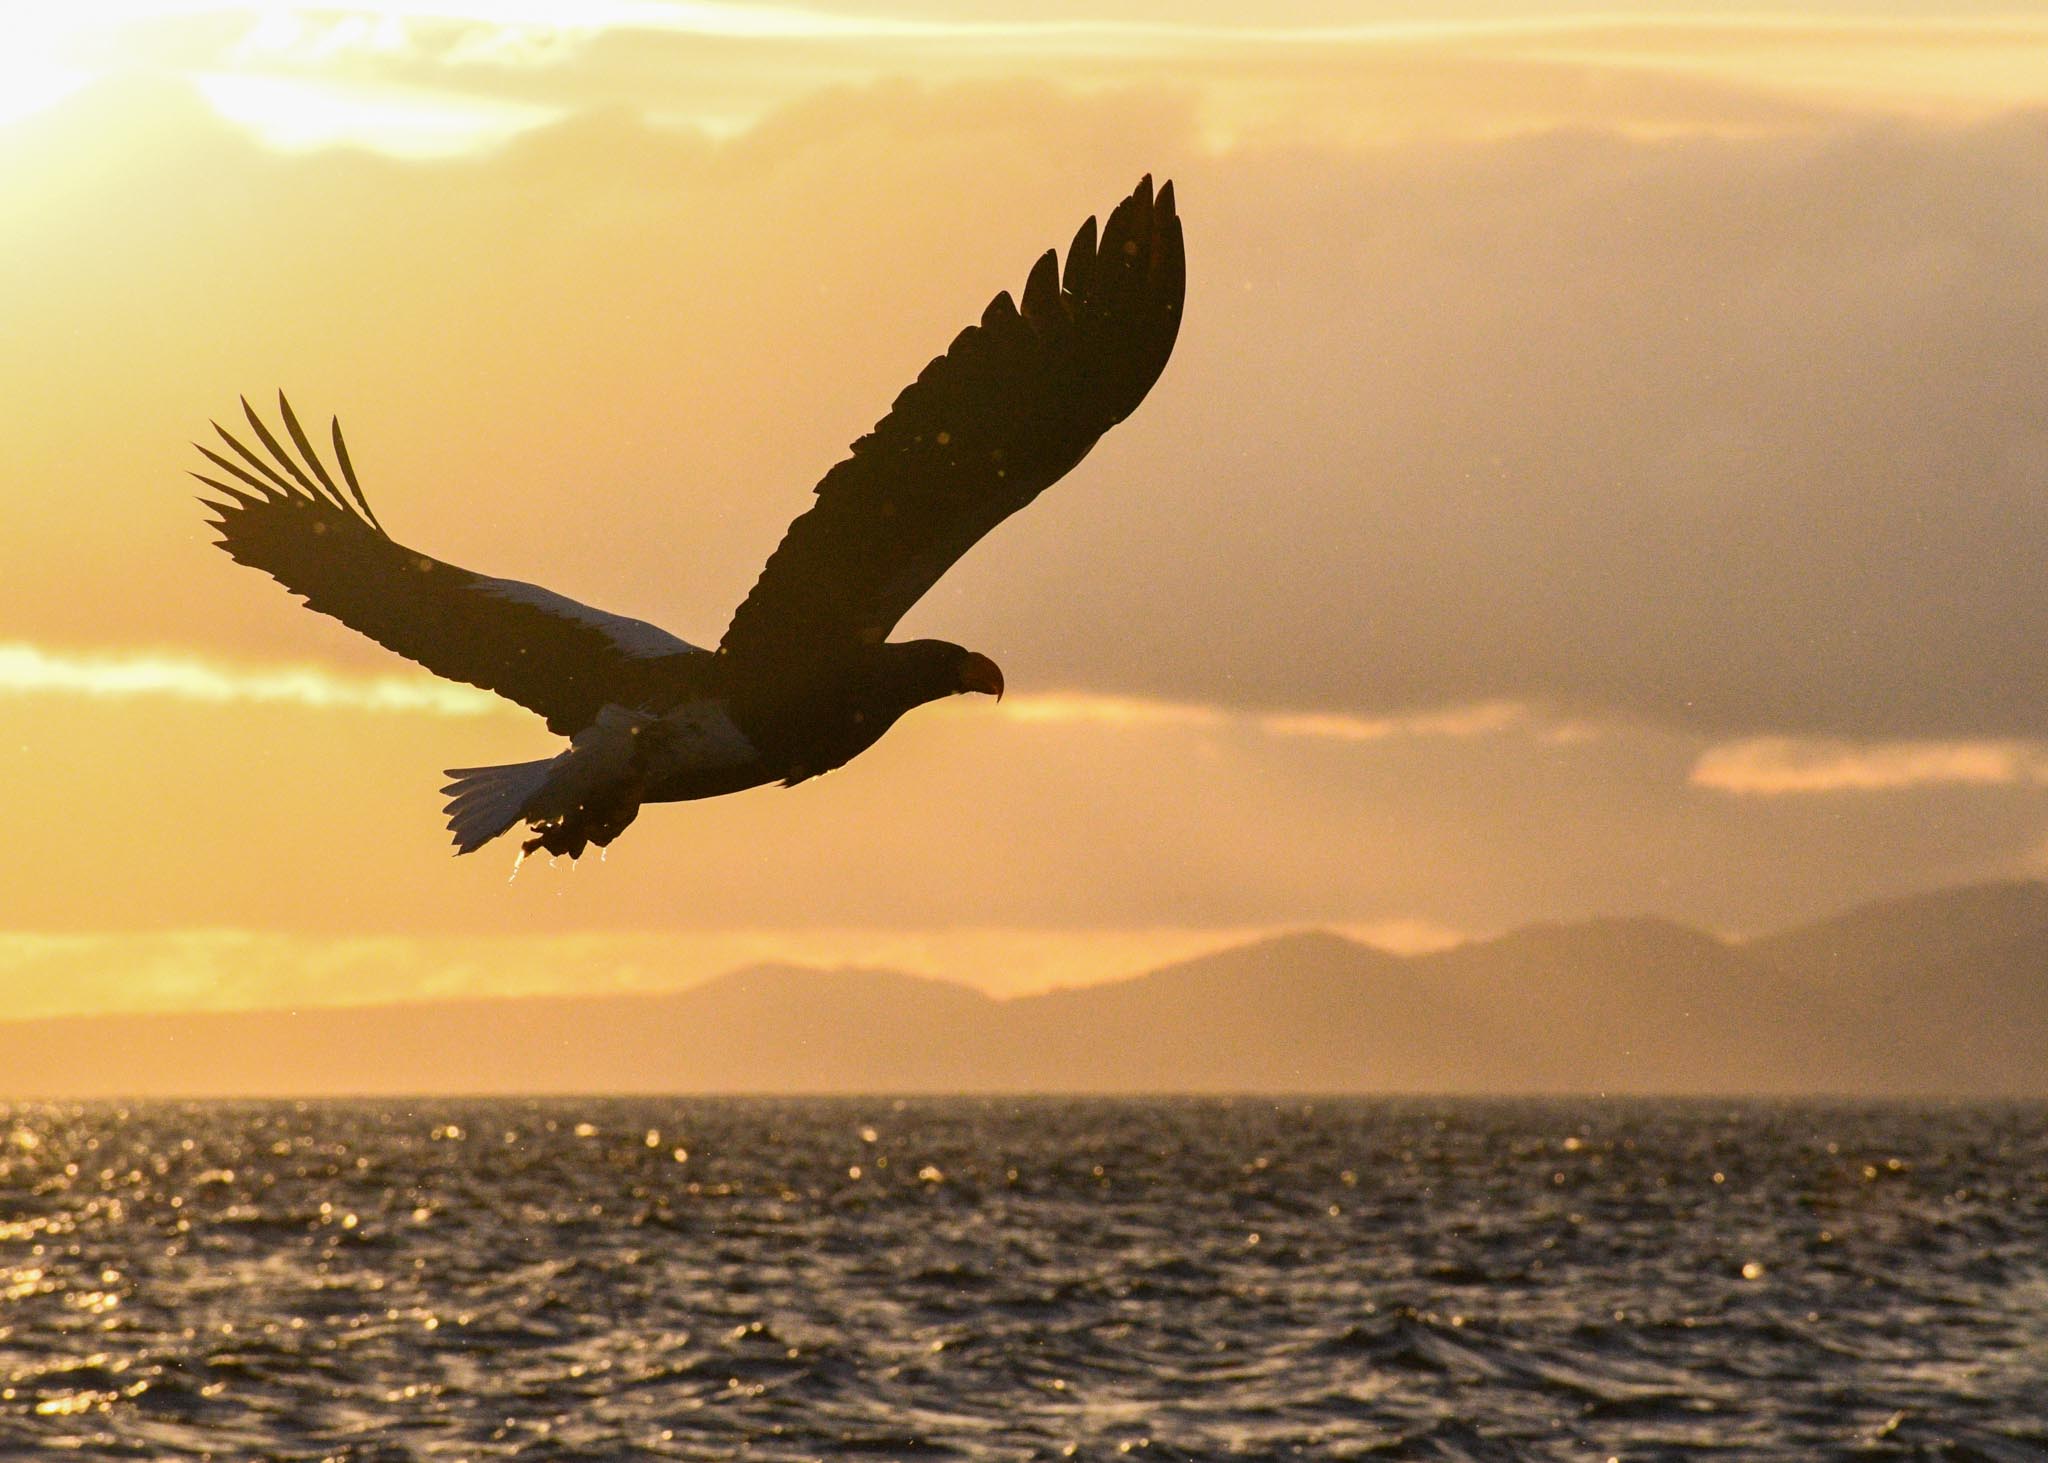 Steller's sea eagle at sunrise.